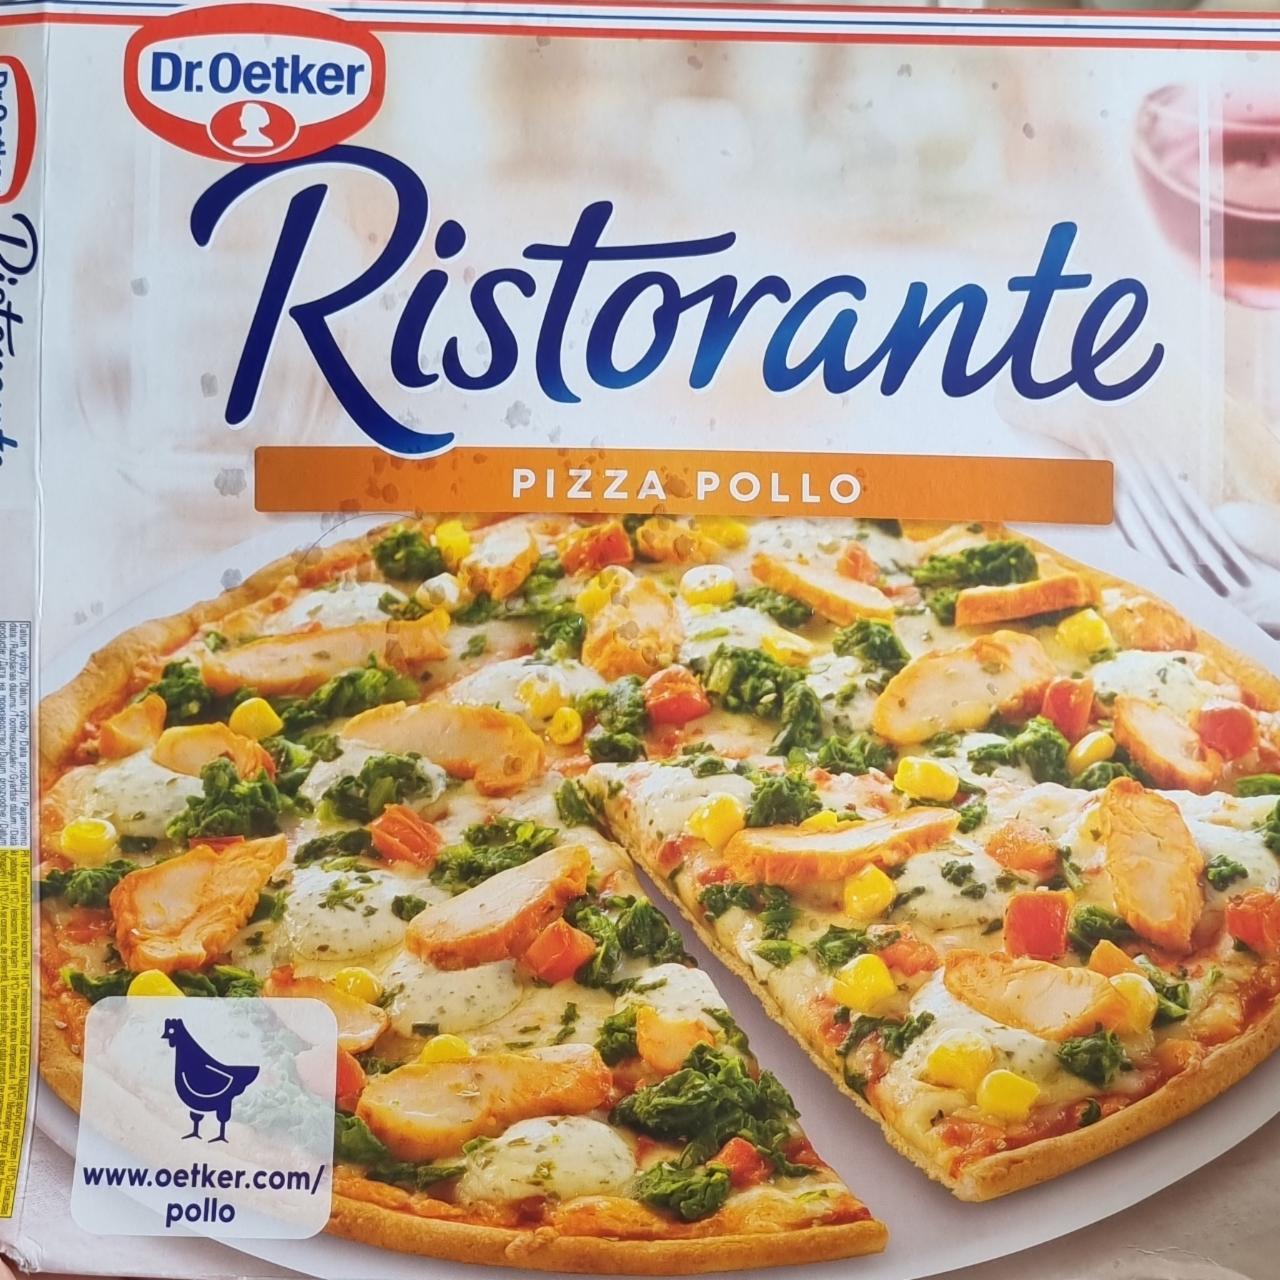 Zdjęcia - Ristorante pizza pollo Dr.Oetker